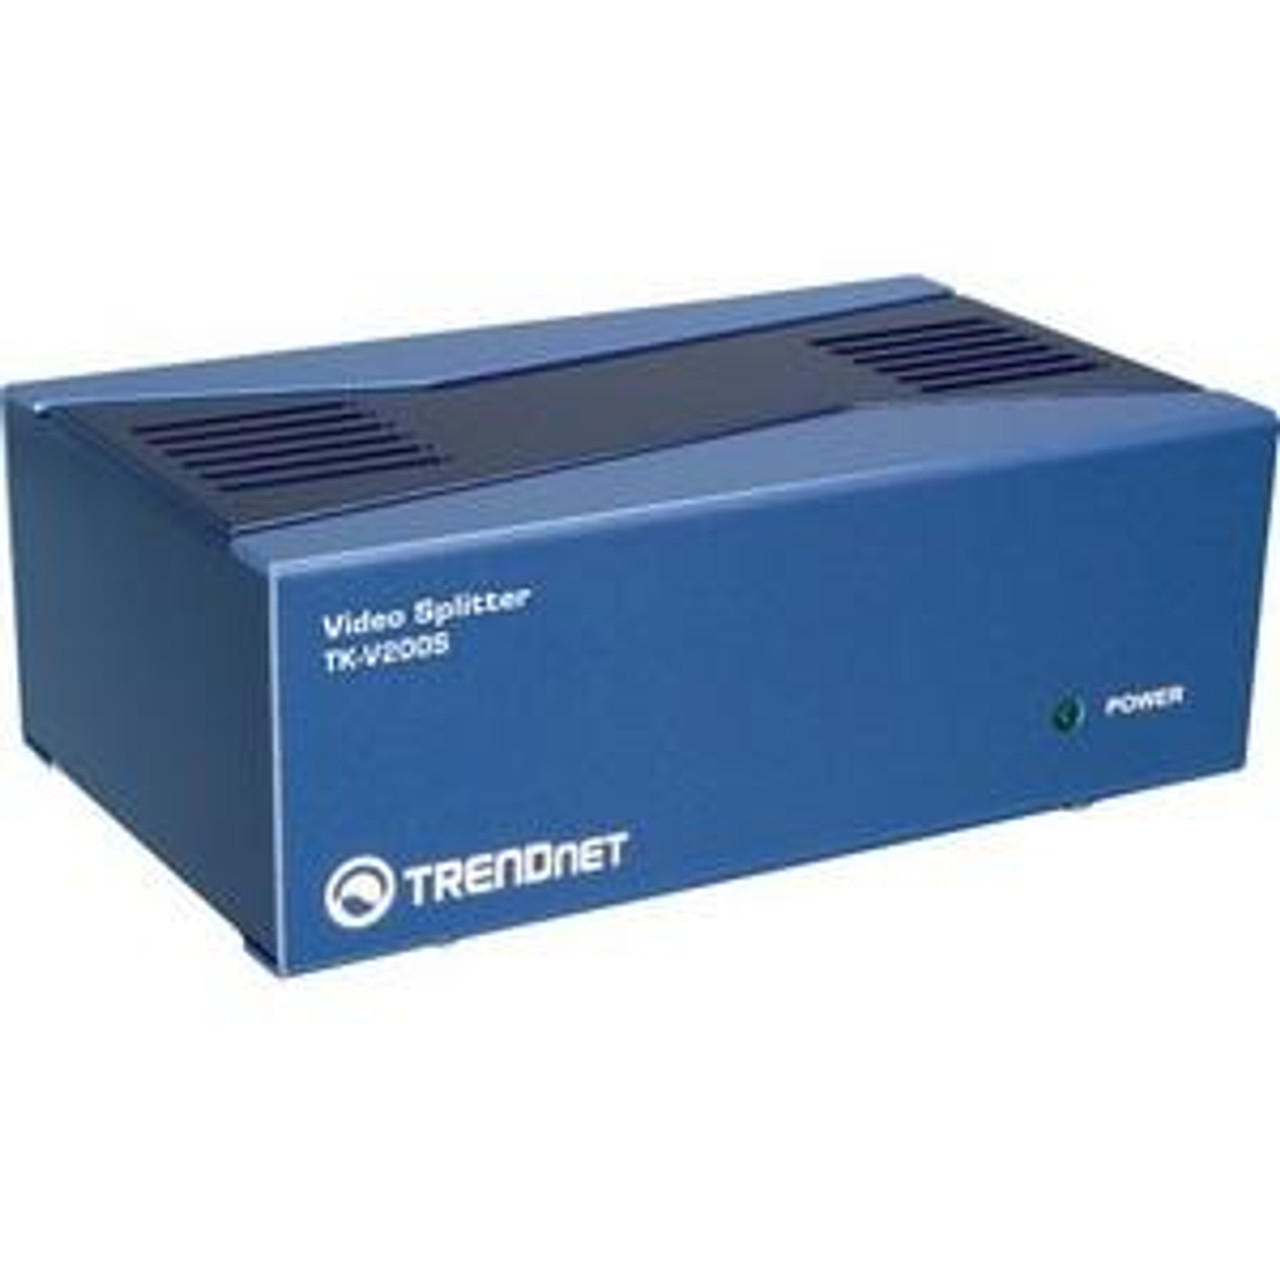 TK-V200S TRENDnet 2-Port Video Splitter 2 x Monitor 2048 x 1536 60Hz SVGA, XGA